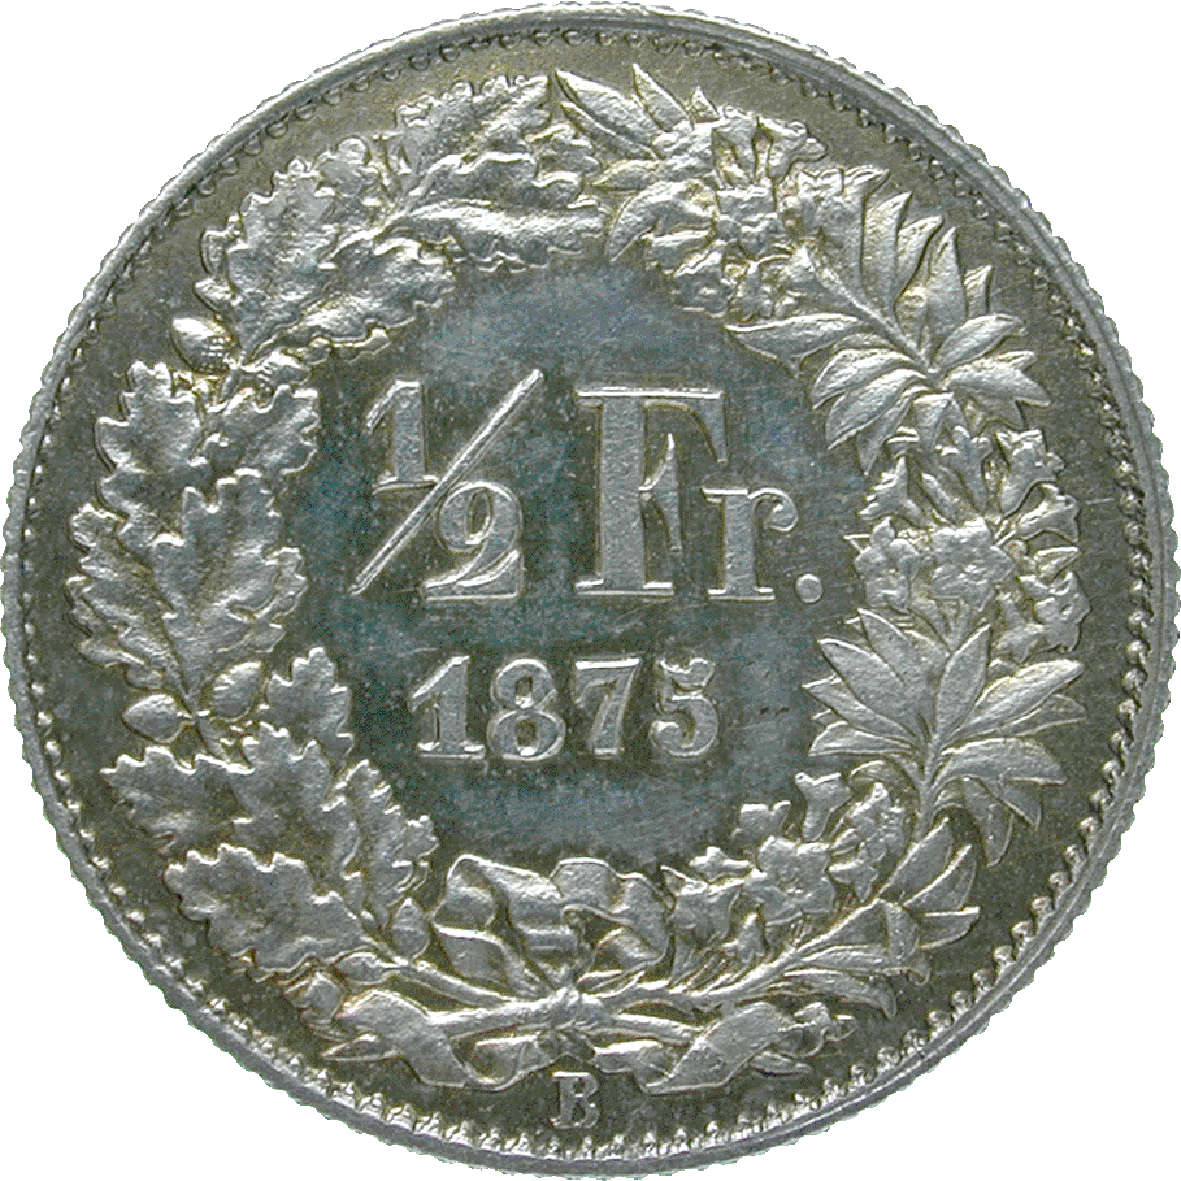 Schweizerische Eidgenossenschaft, 1/2 Franken 1875  (reverse)